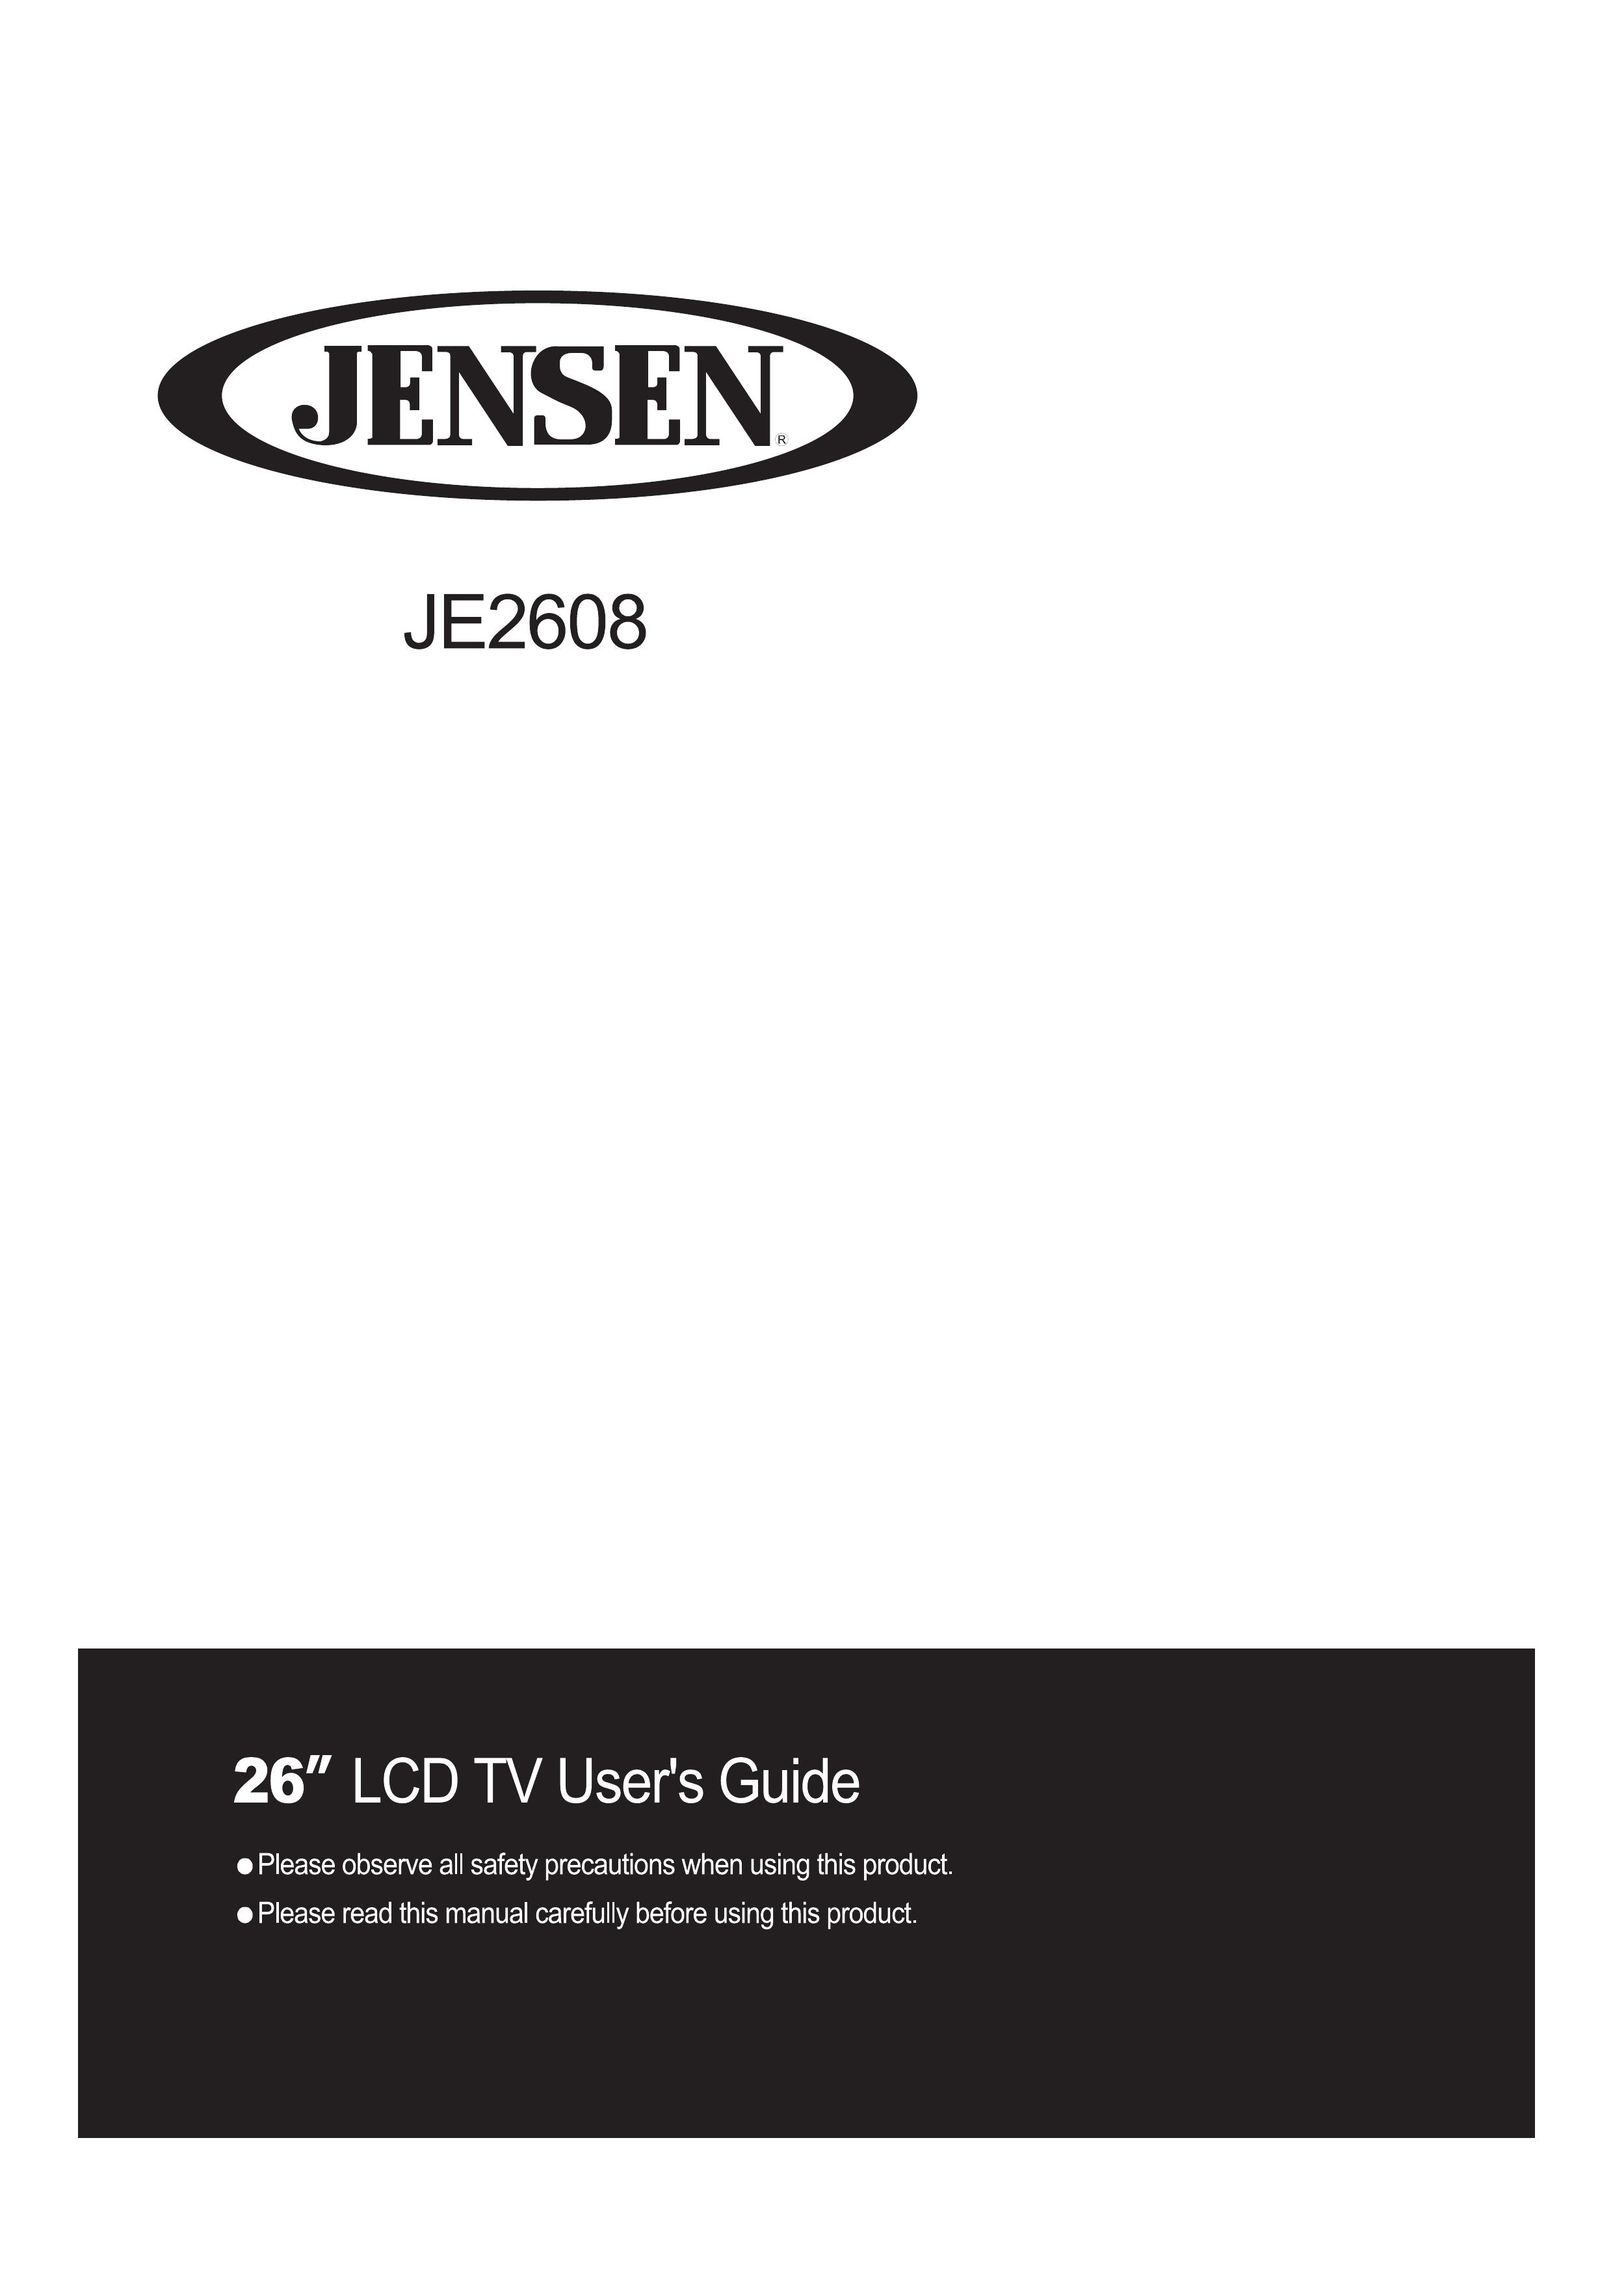 Jensen JE2608 Flat Panel Television User Manual